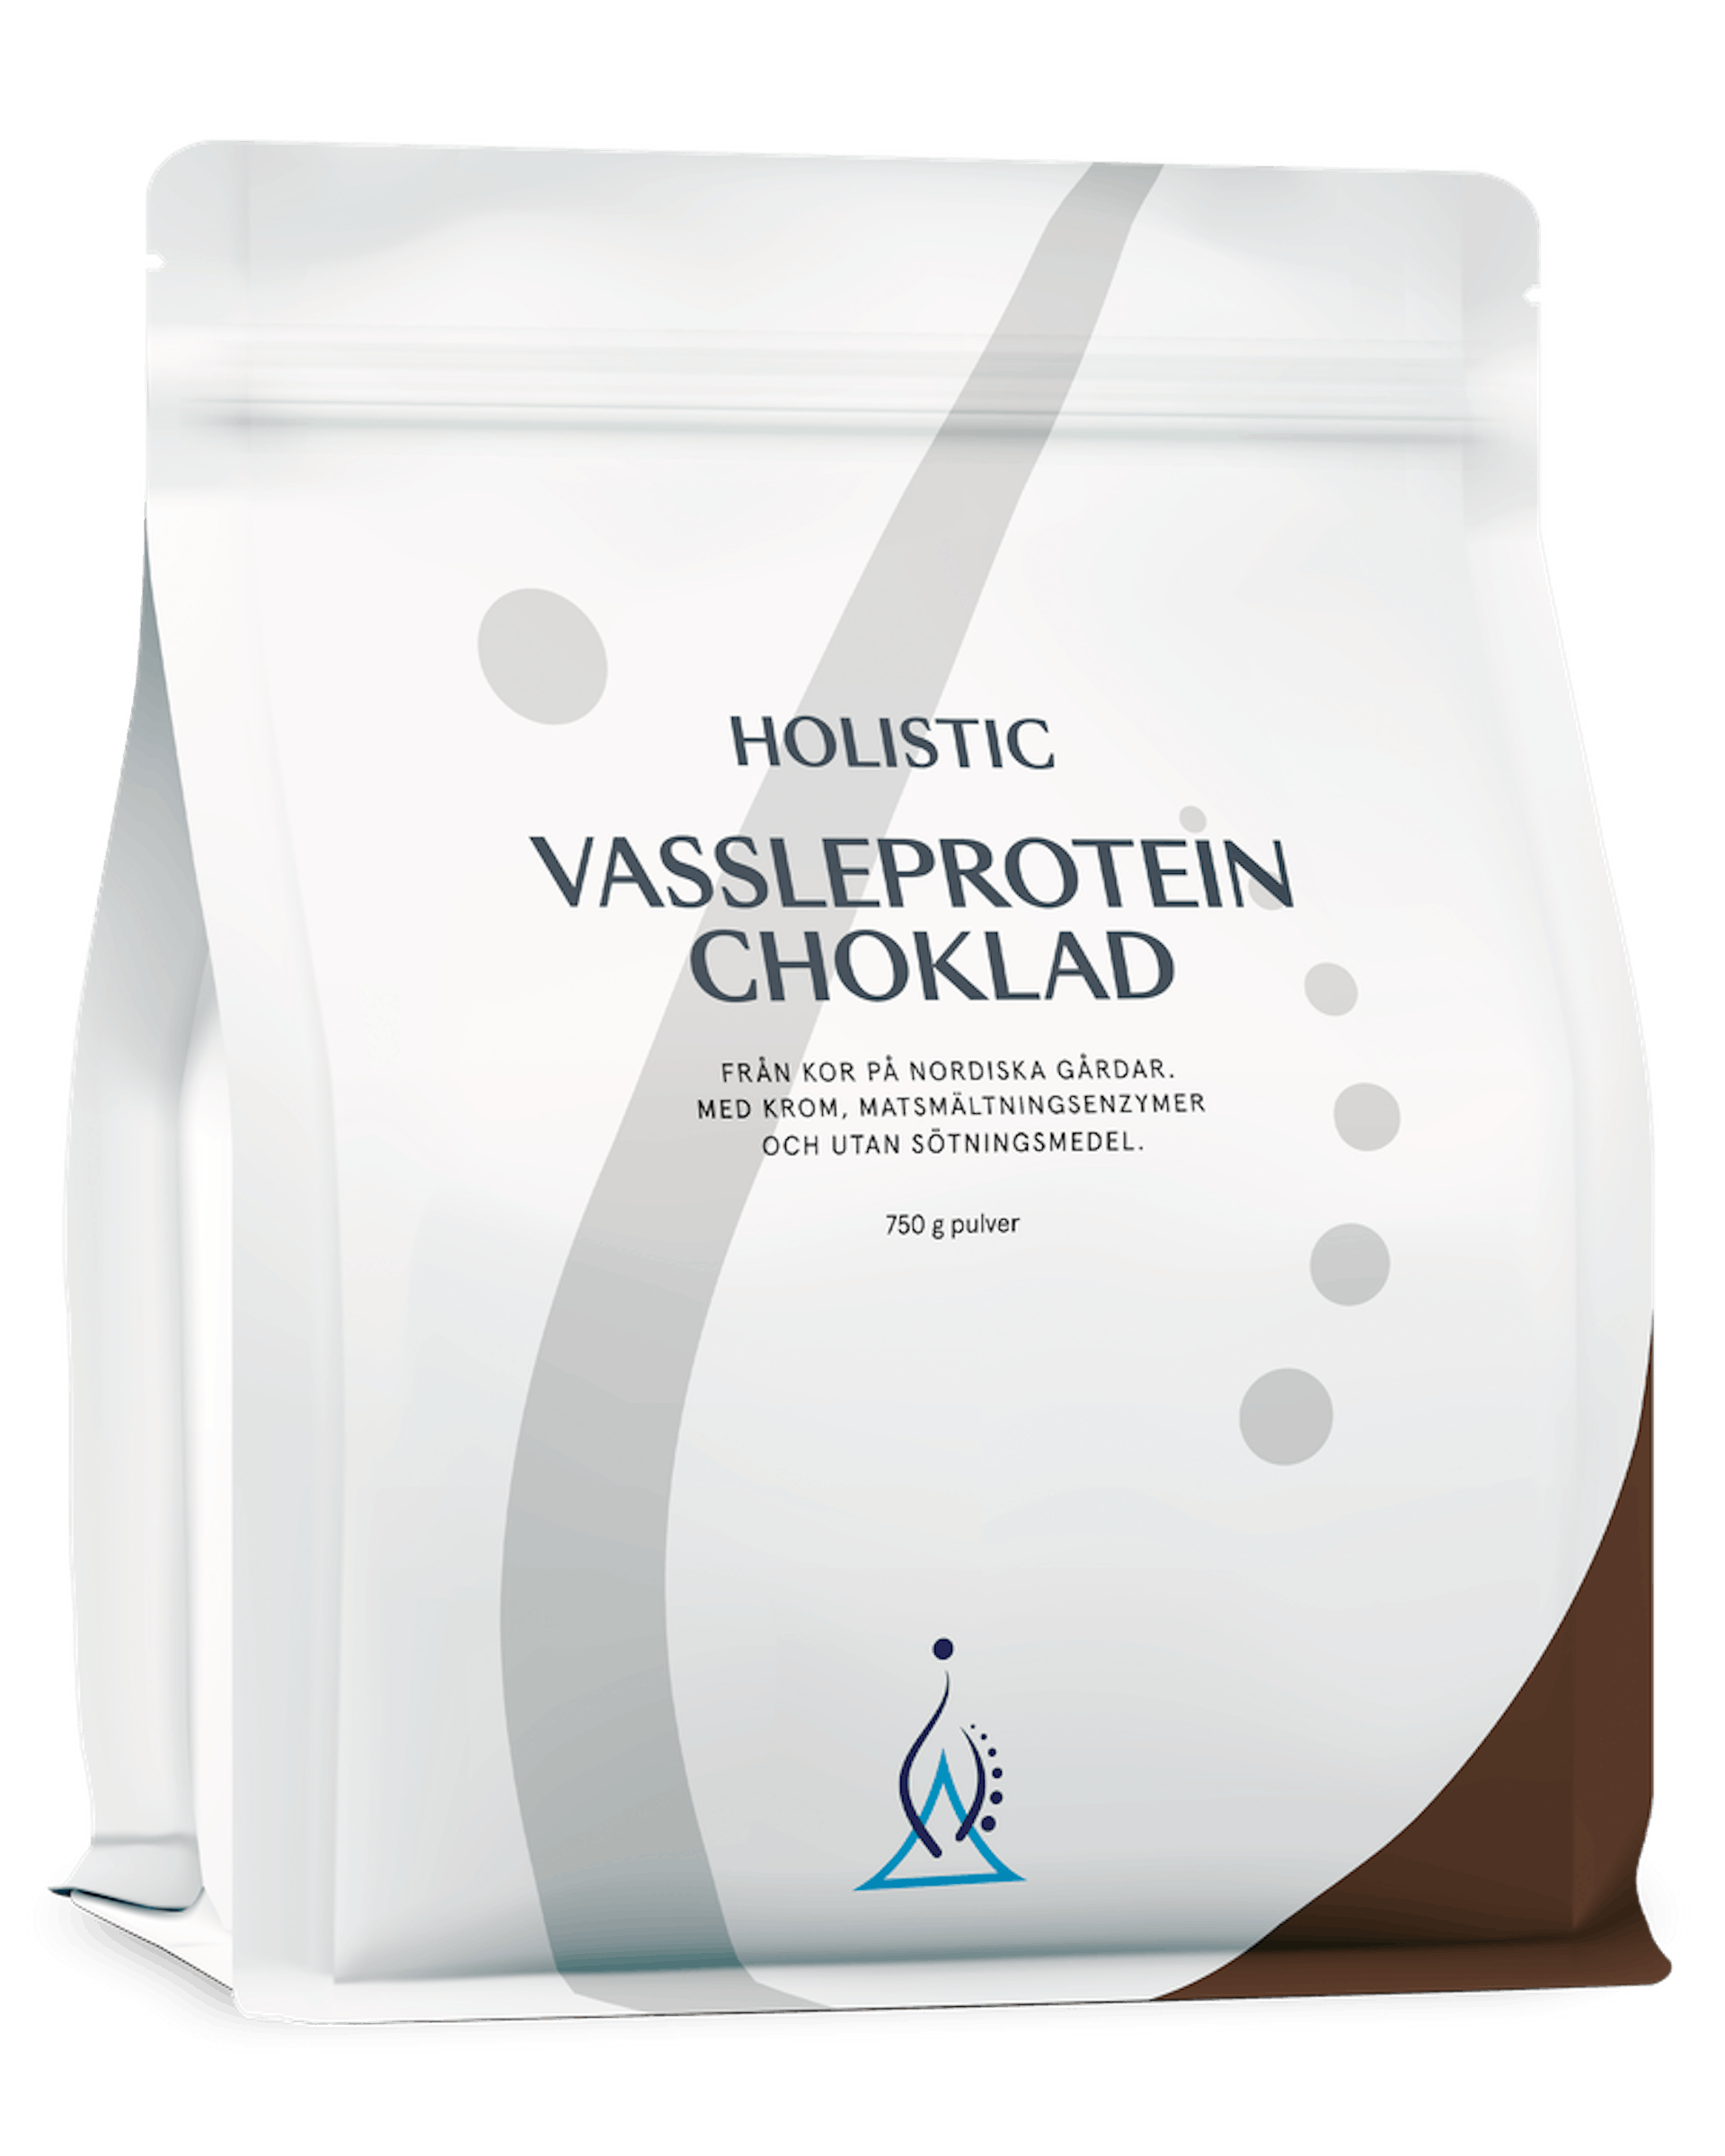 Vassleprotein choklad, 750 g